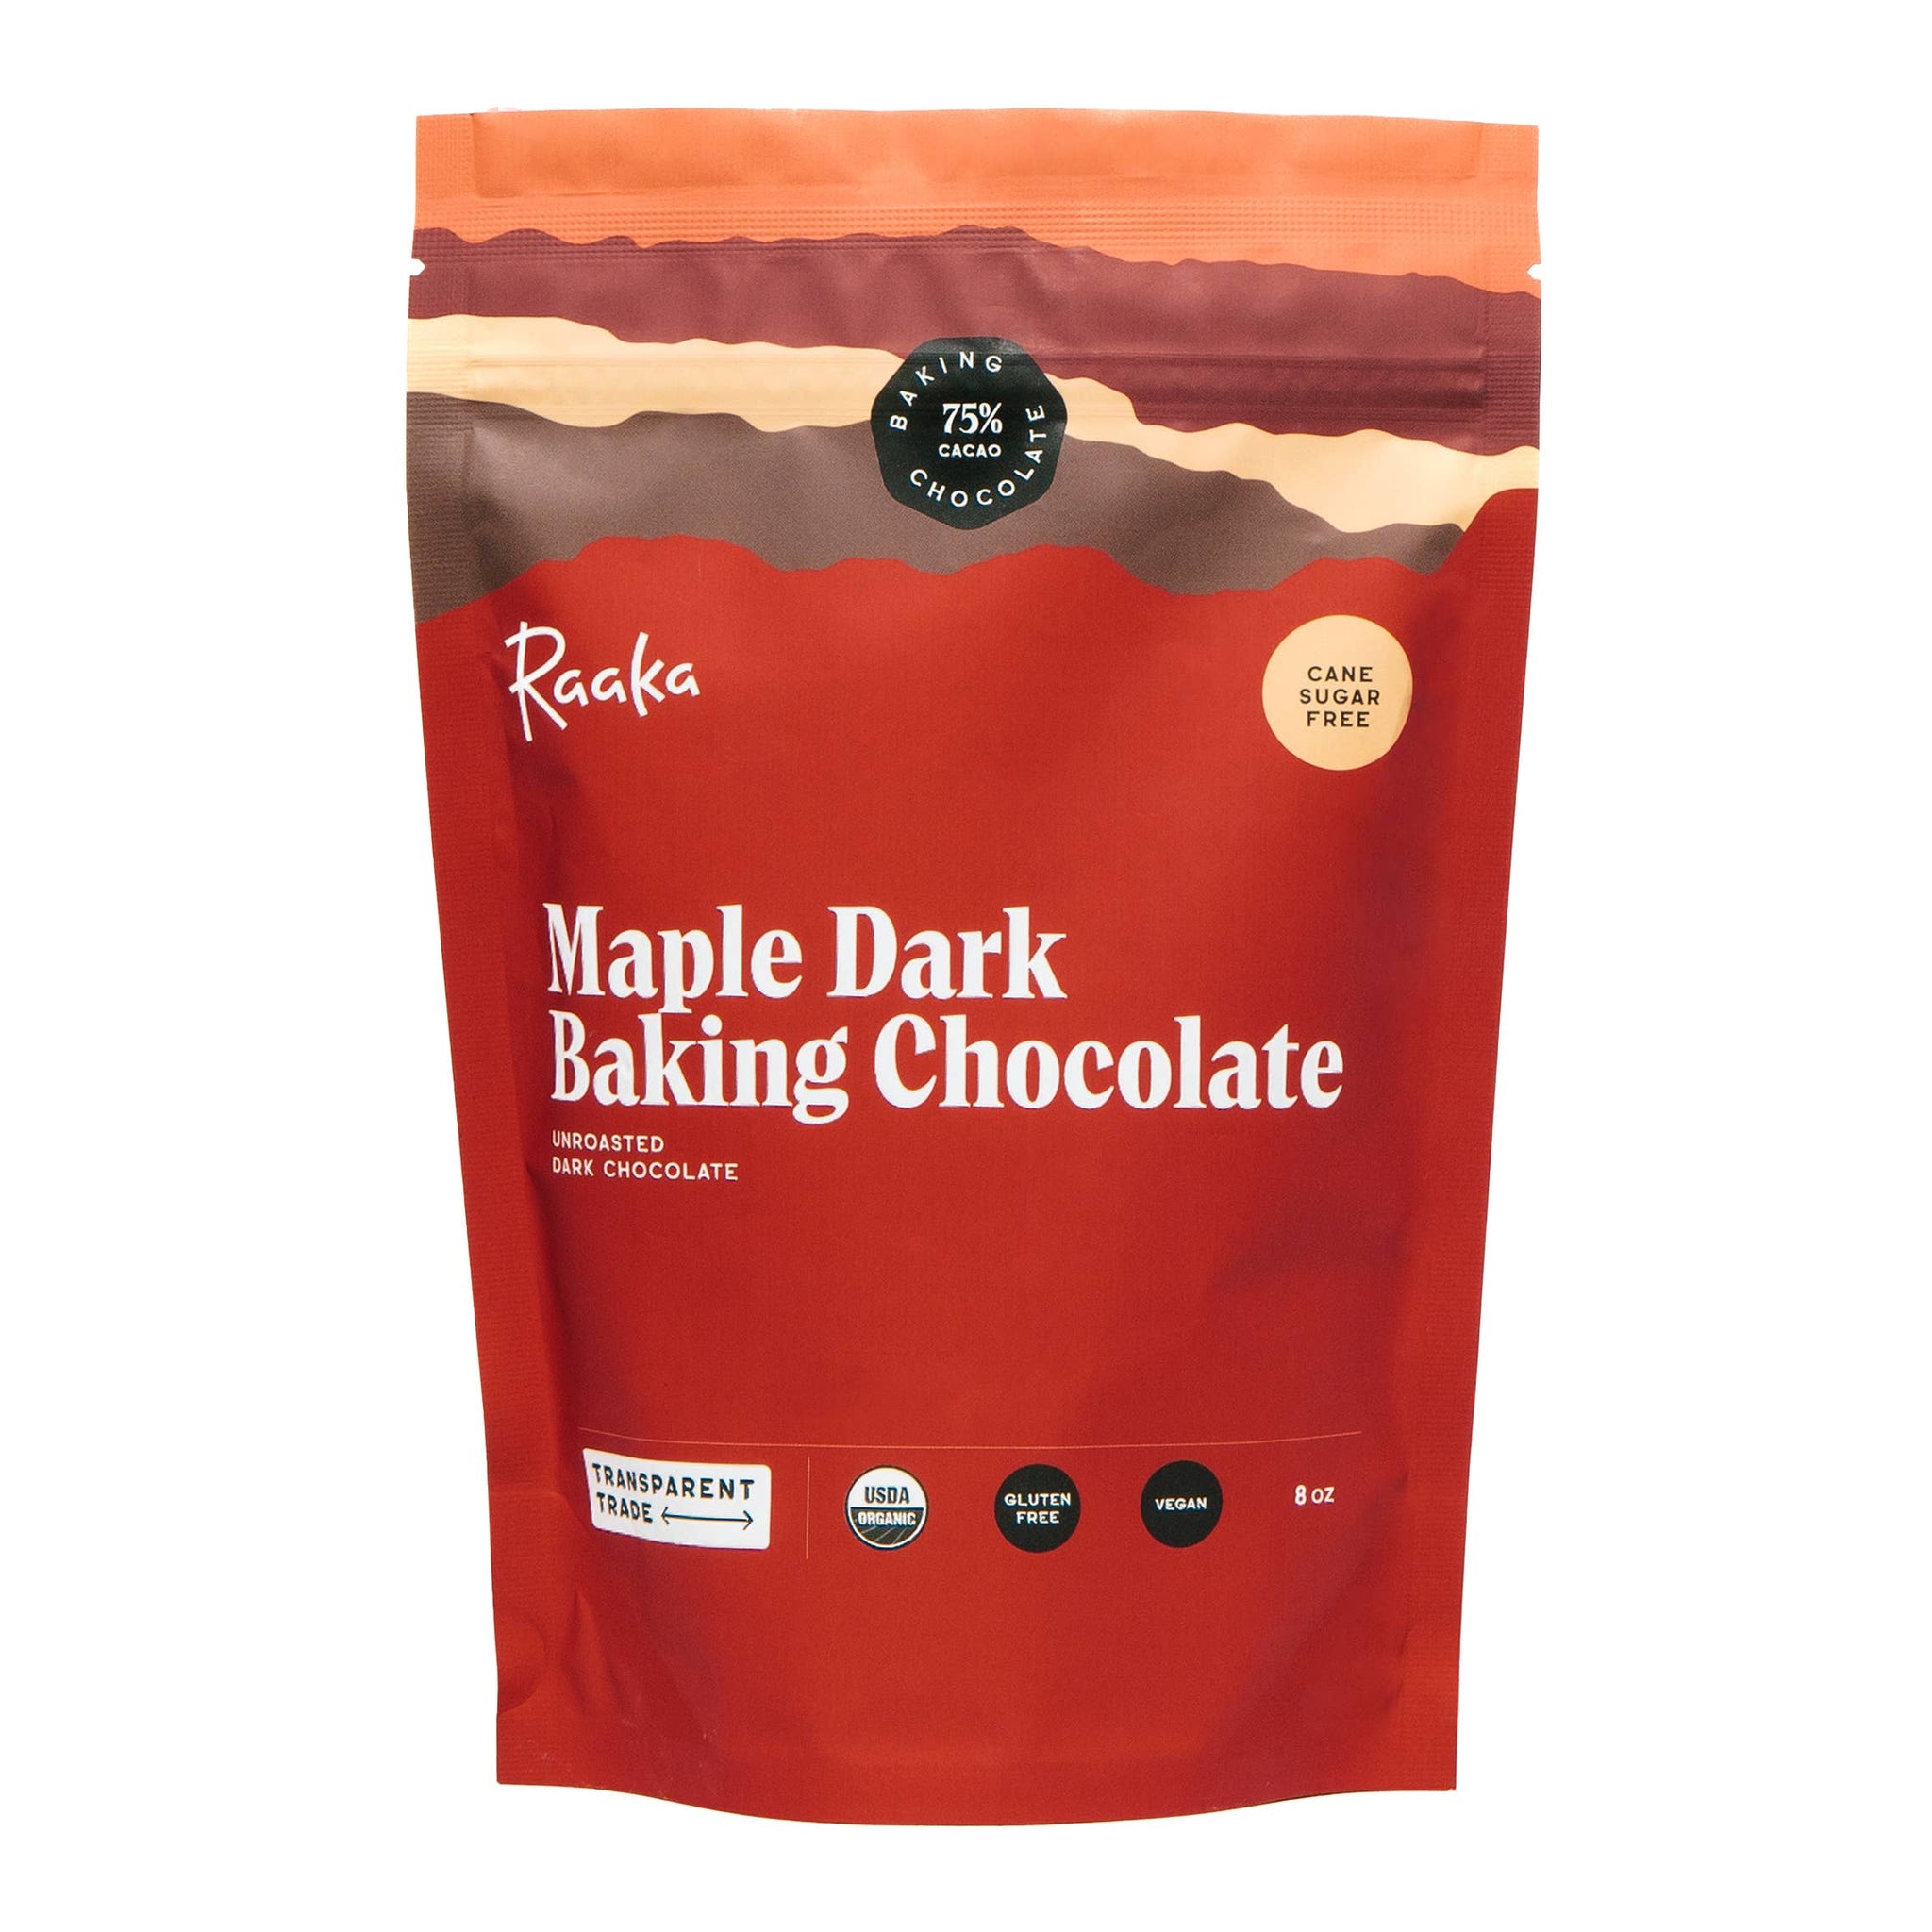 Raaka Baking Chocolate ~ Classic 71% and Maple